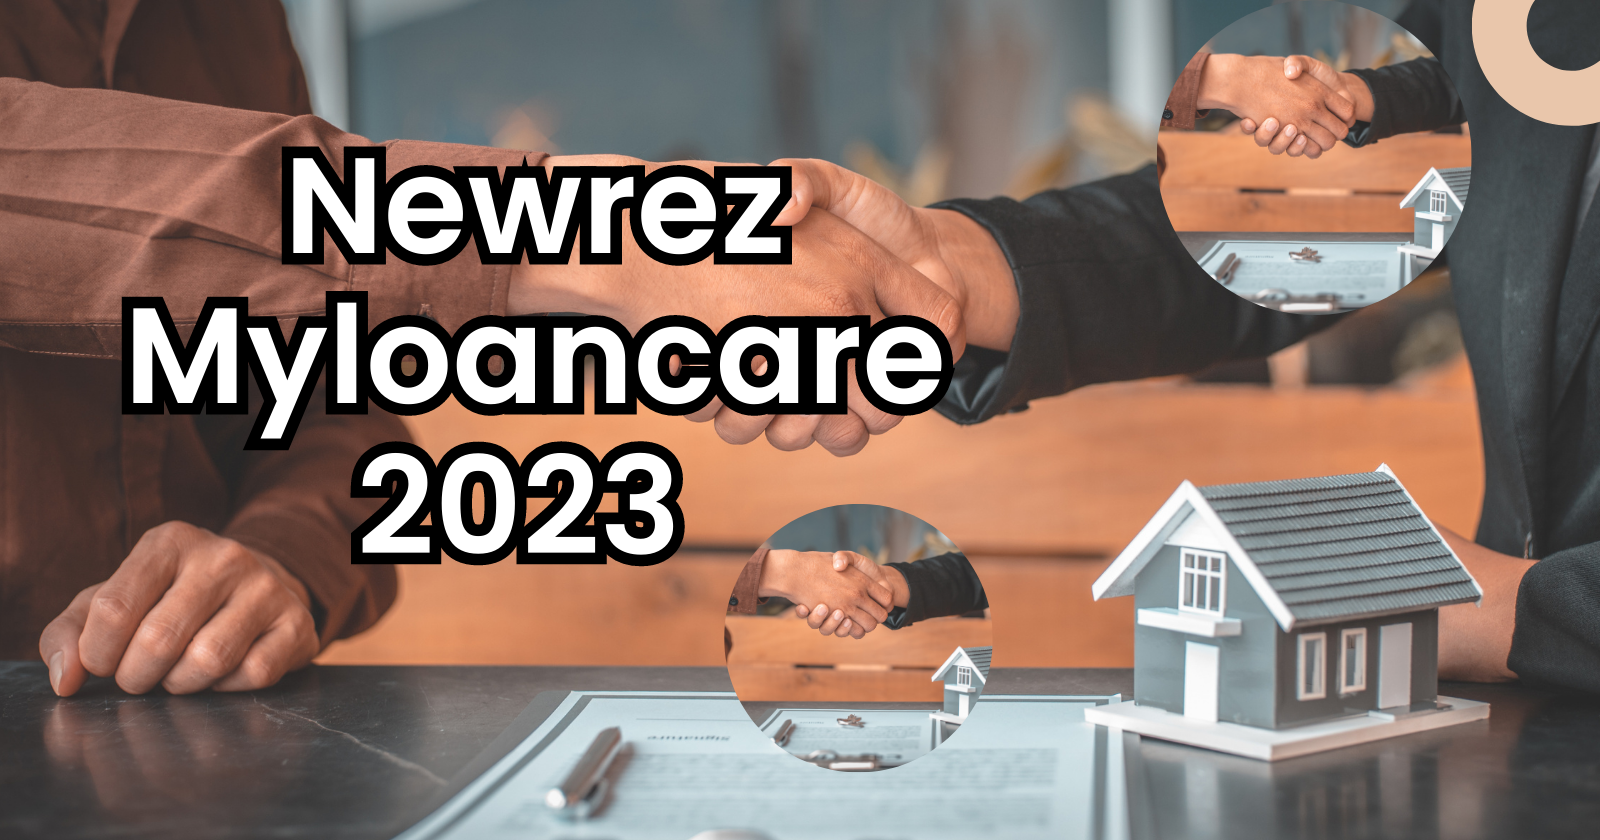 Newrez Myloancare 2023